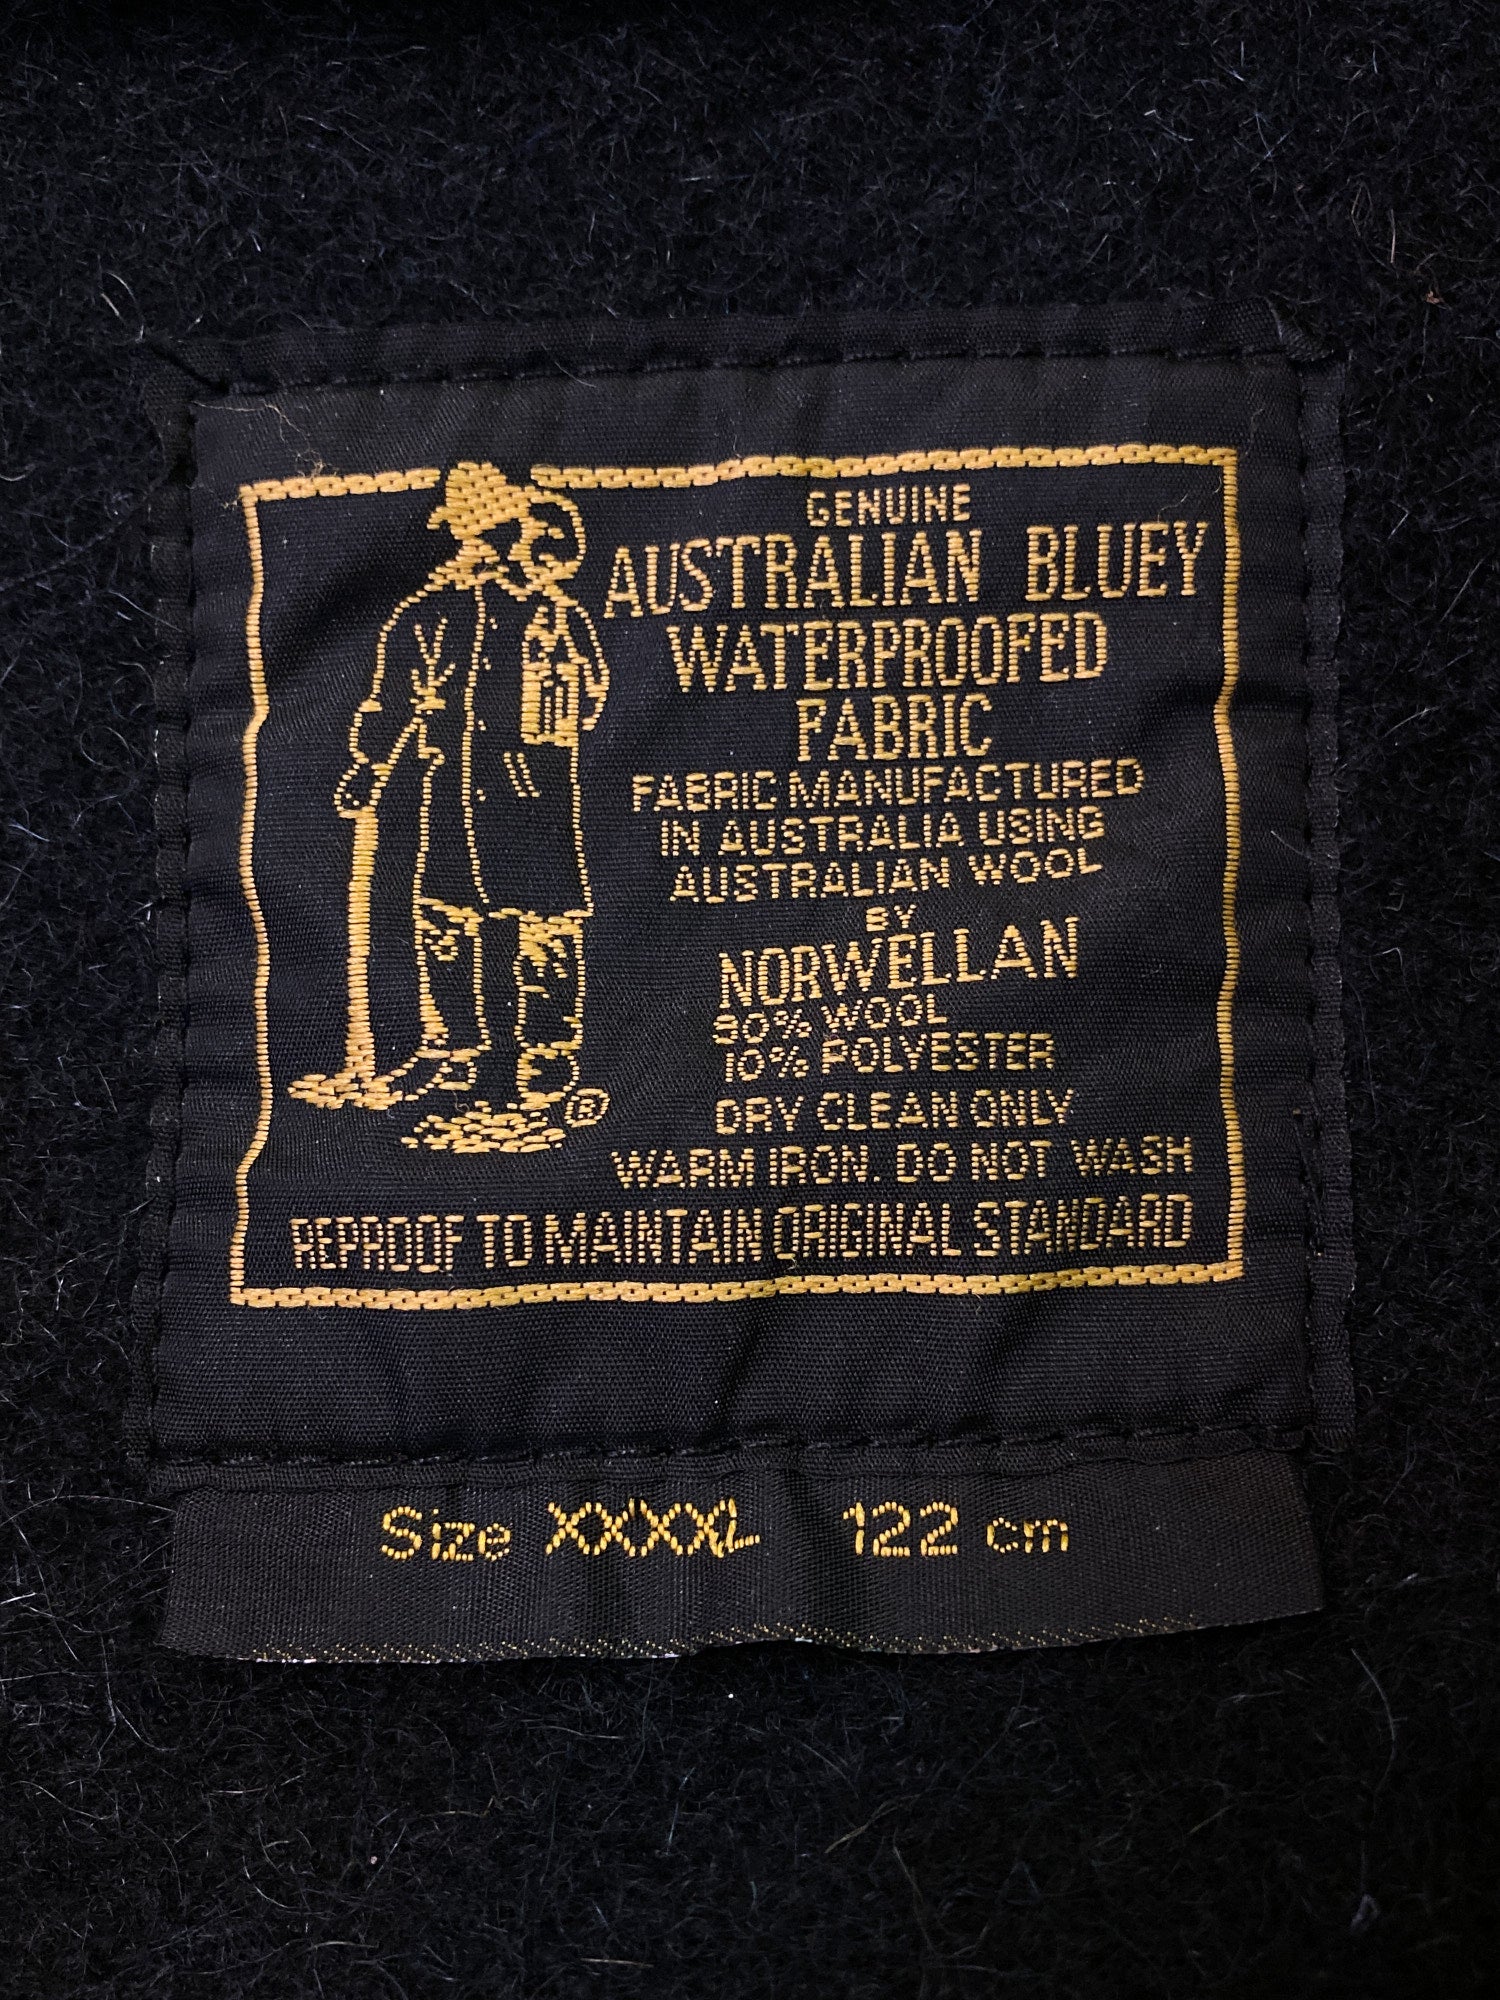 Vintage Norwellan heavy charcoal wool waterproofed bluey jacket - size XXXXL